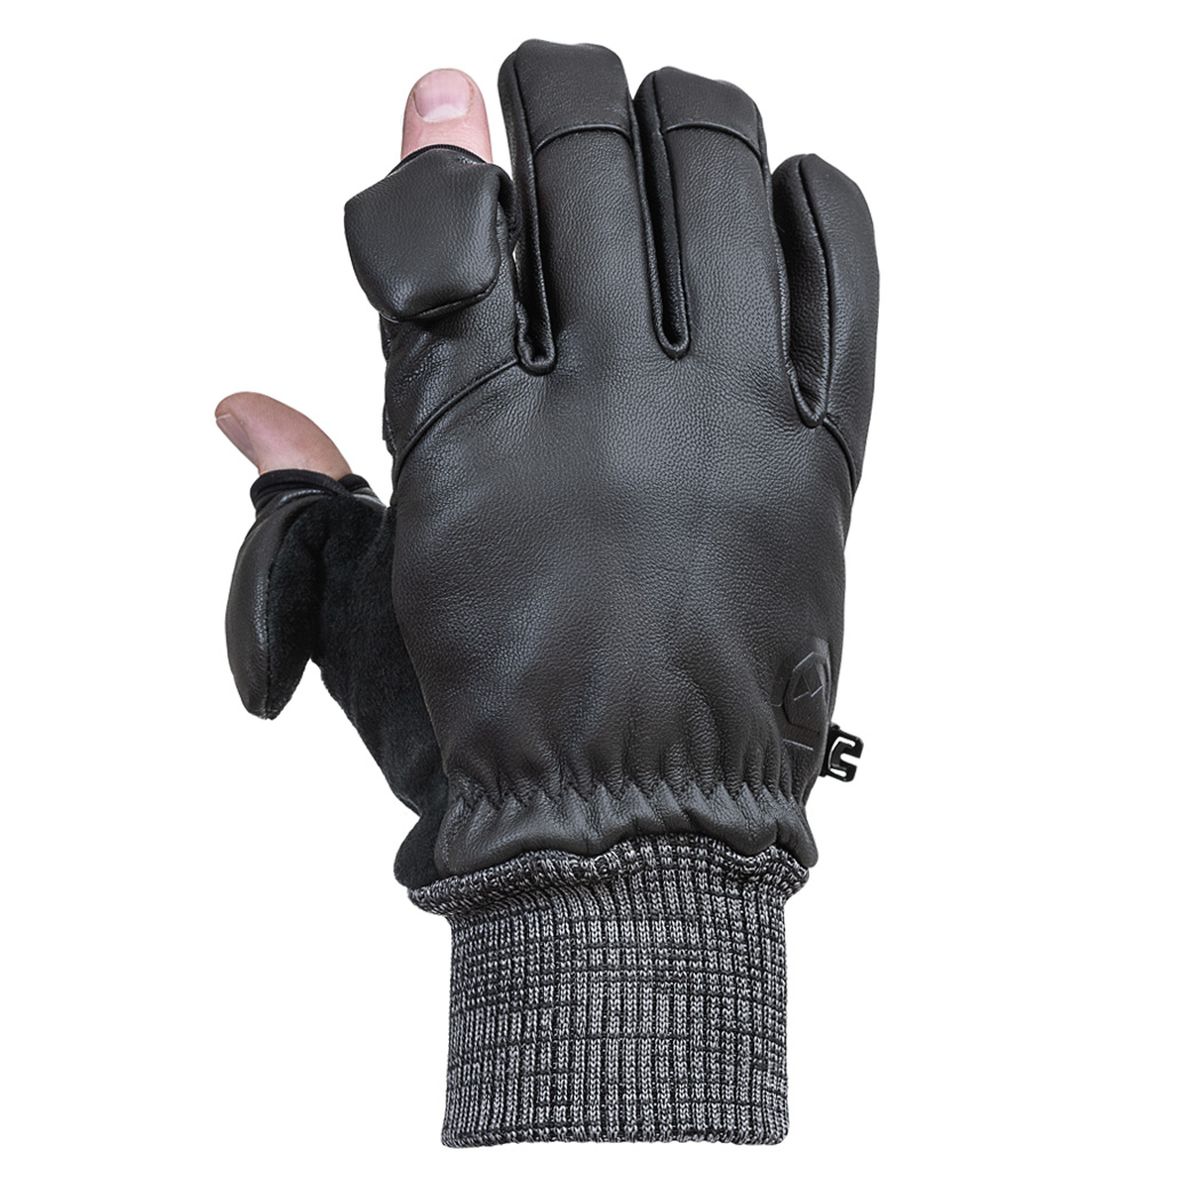 Vallerret Hatchet Leather Glove Black, Leder-Fotohandschuhe XS Schwarz